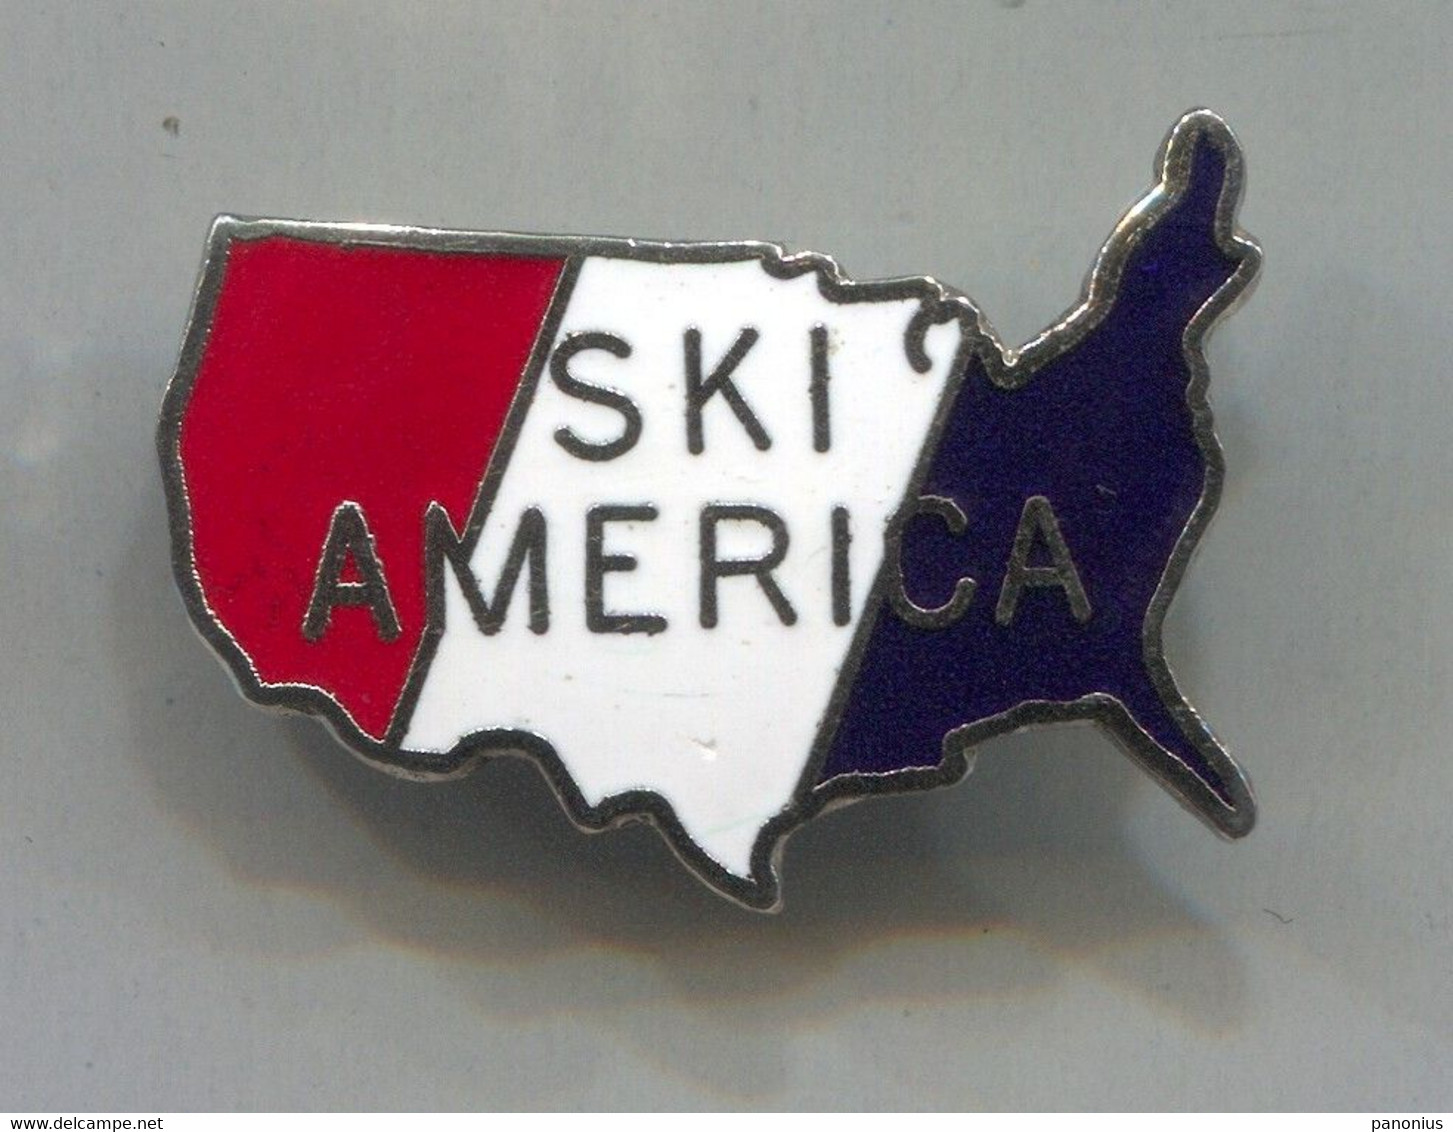 Ski Skiing Jumping - SKI AMERICA, Vintage Pin Badge Abzeichen, Enamel - Sports D'hiver